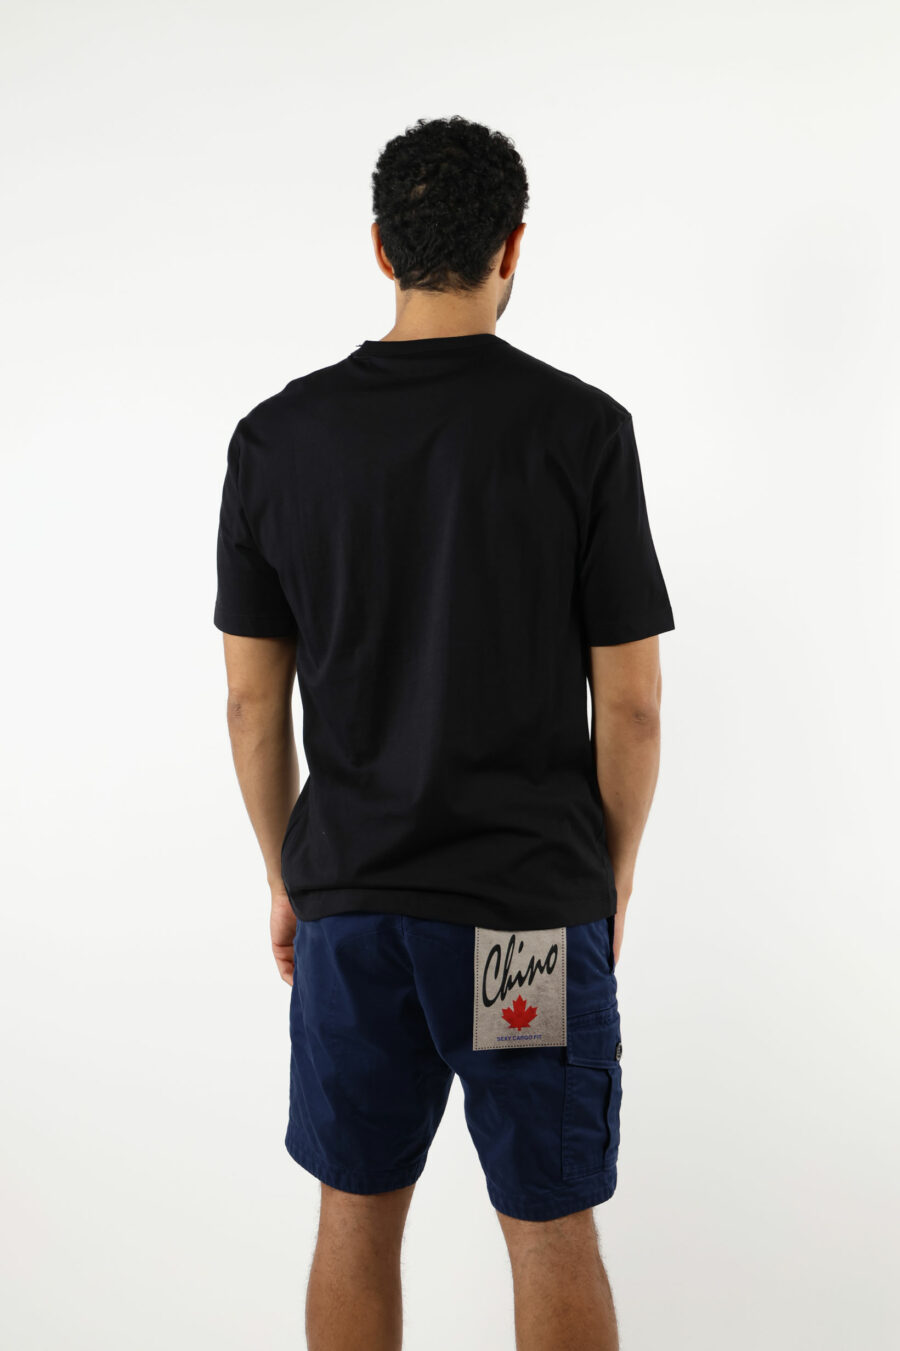 Black T-shirt with "spray" square logo - 111153